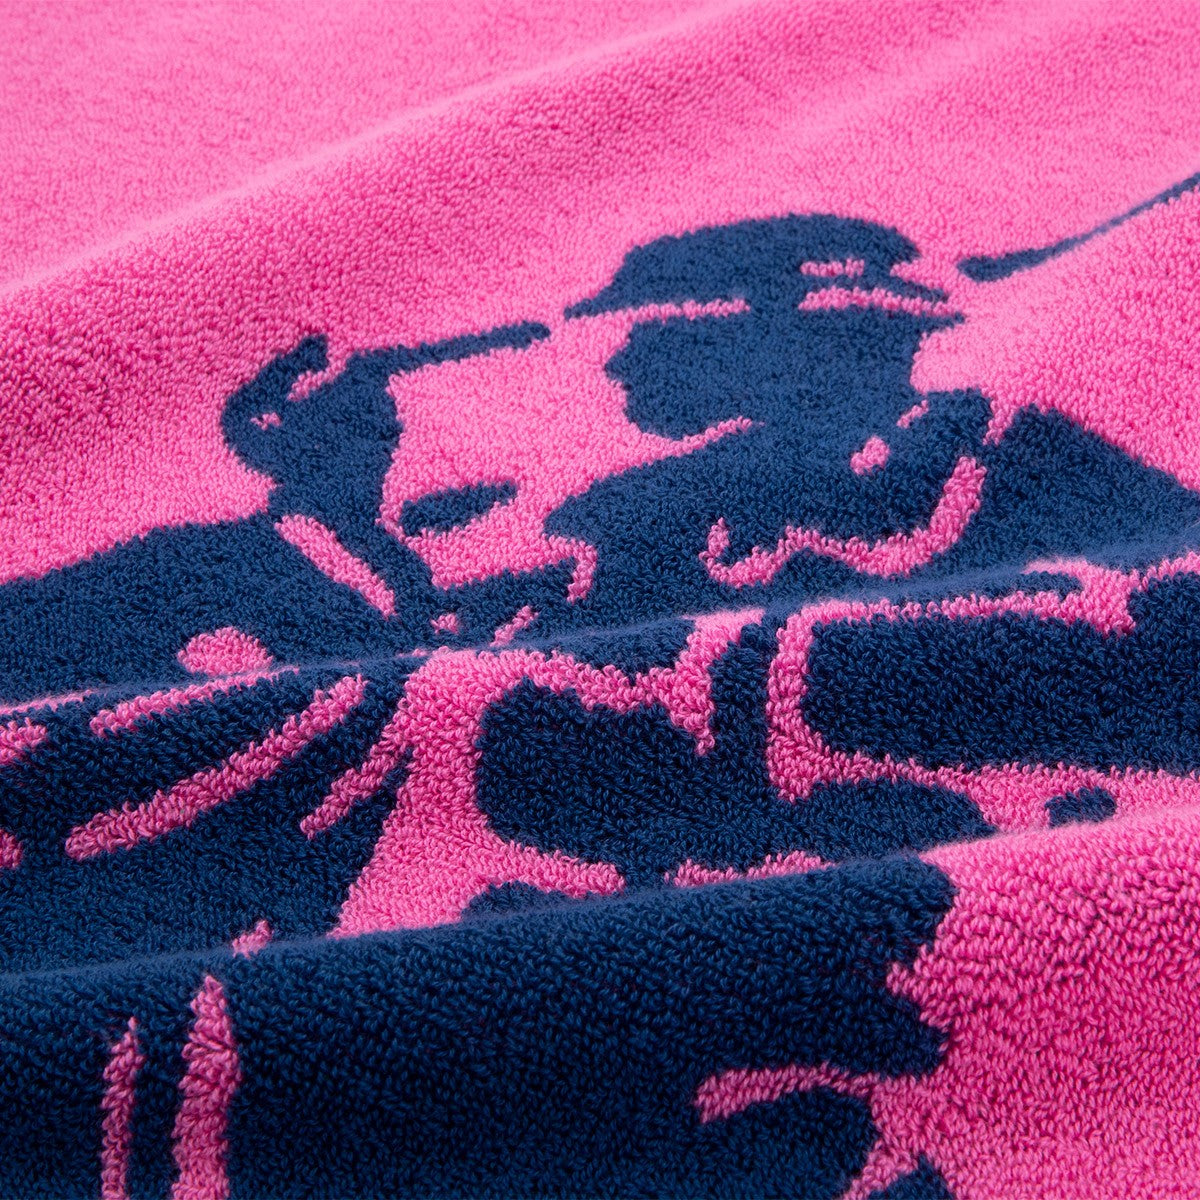 Ralph Lauren Polo Jacquard Beach Towel 100x170cm | Pink/Navy